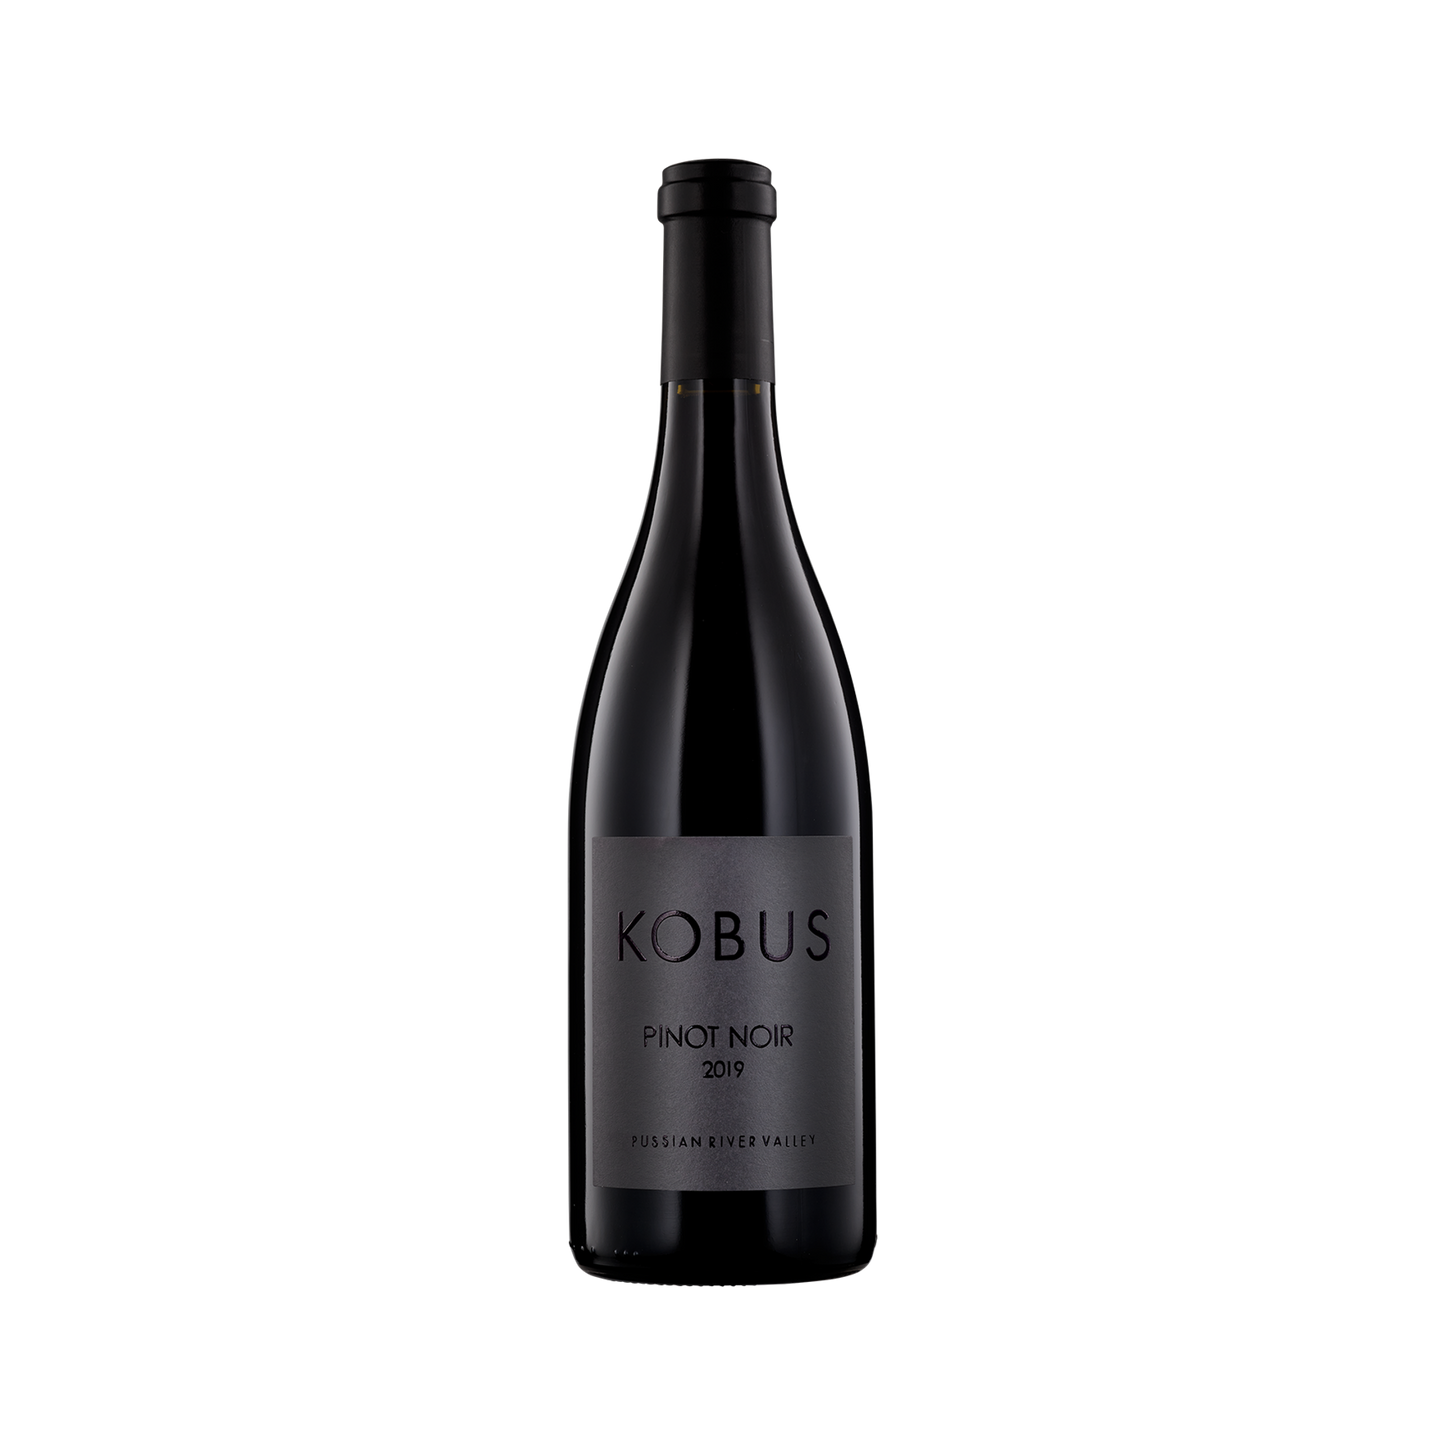 A bottle of Kobus 2019 Pinot Noir